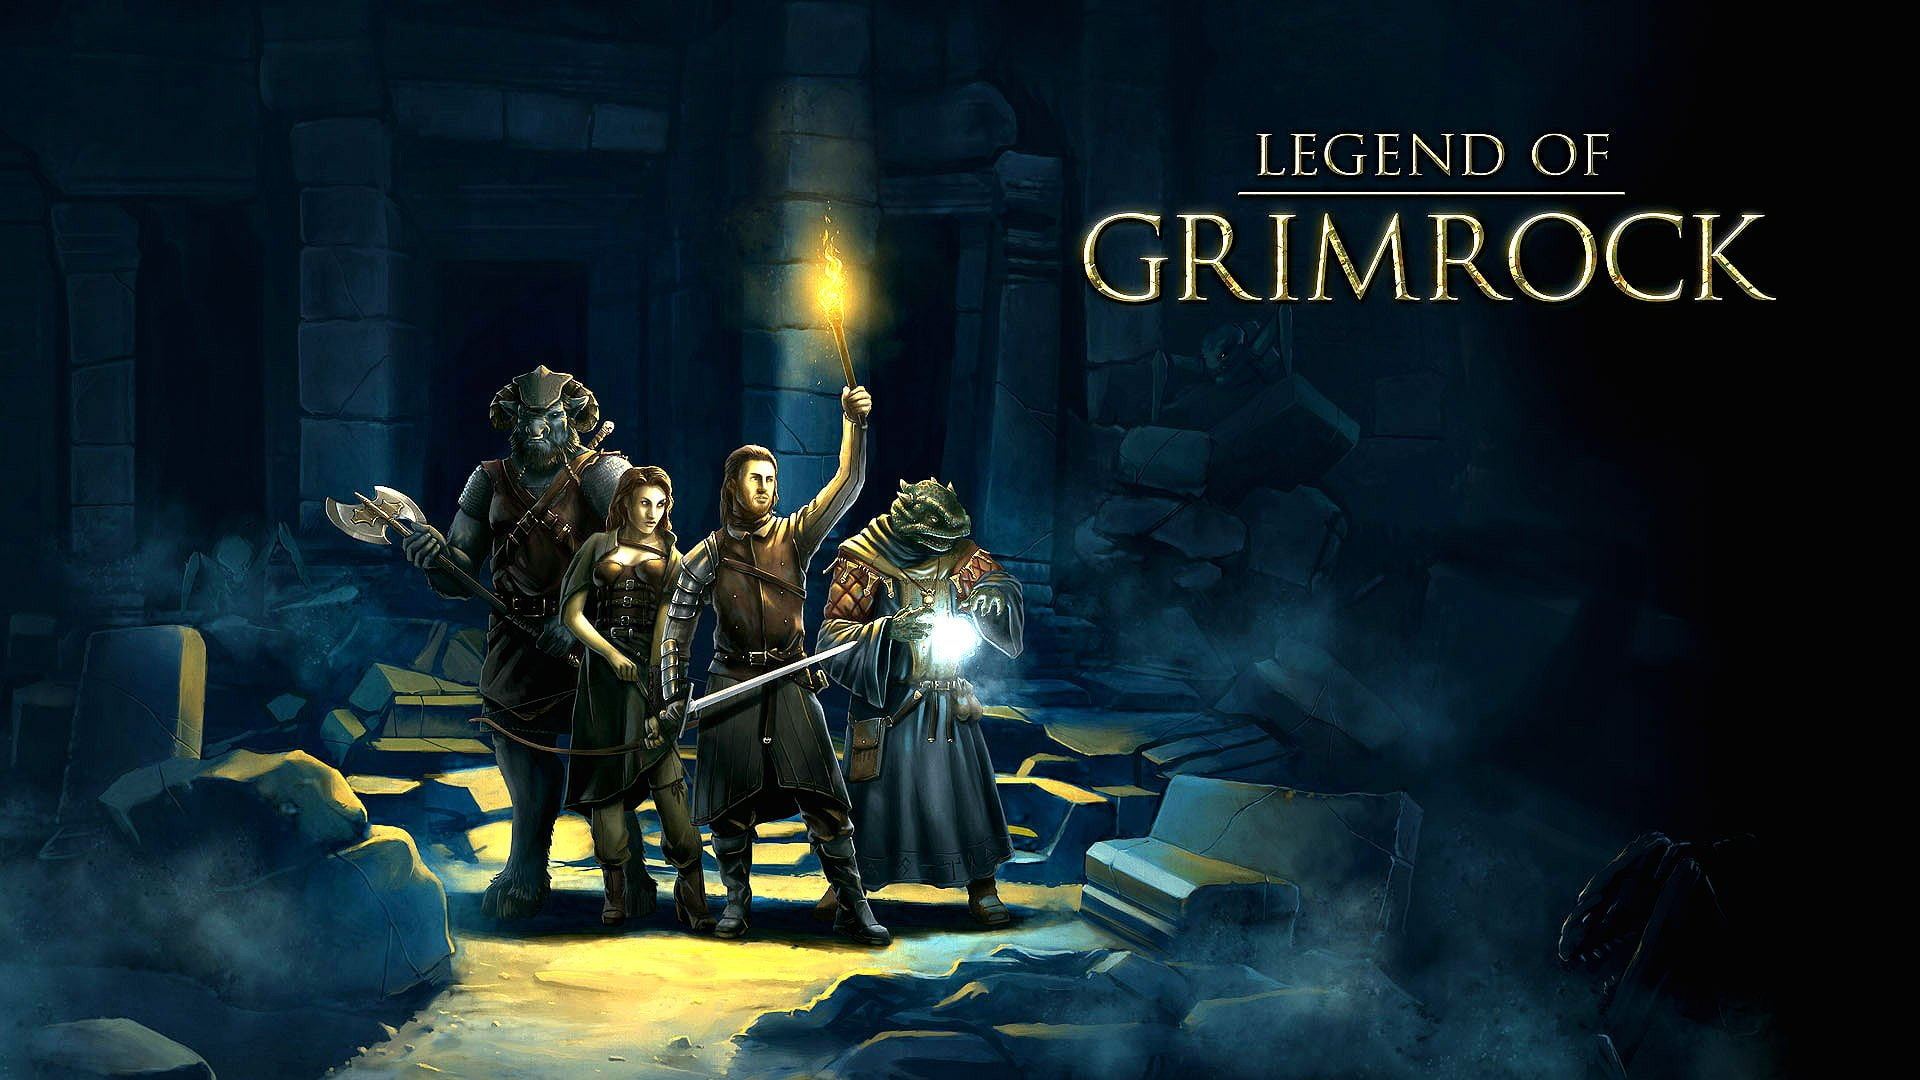 action, crawling, dungeon, fantasy, grimlock, legend, legend of grimrock